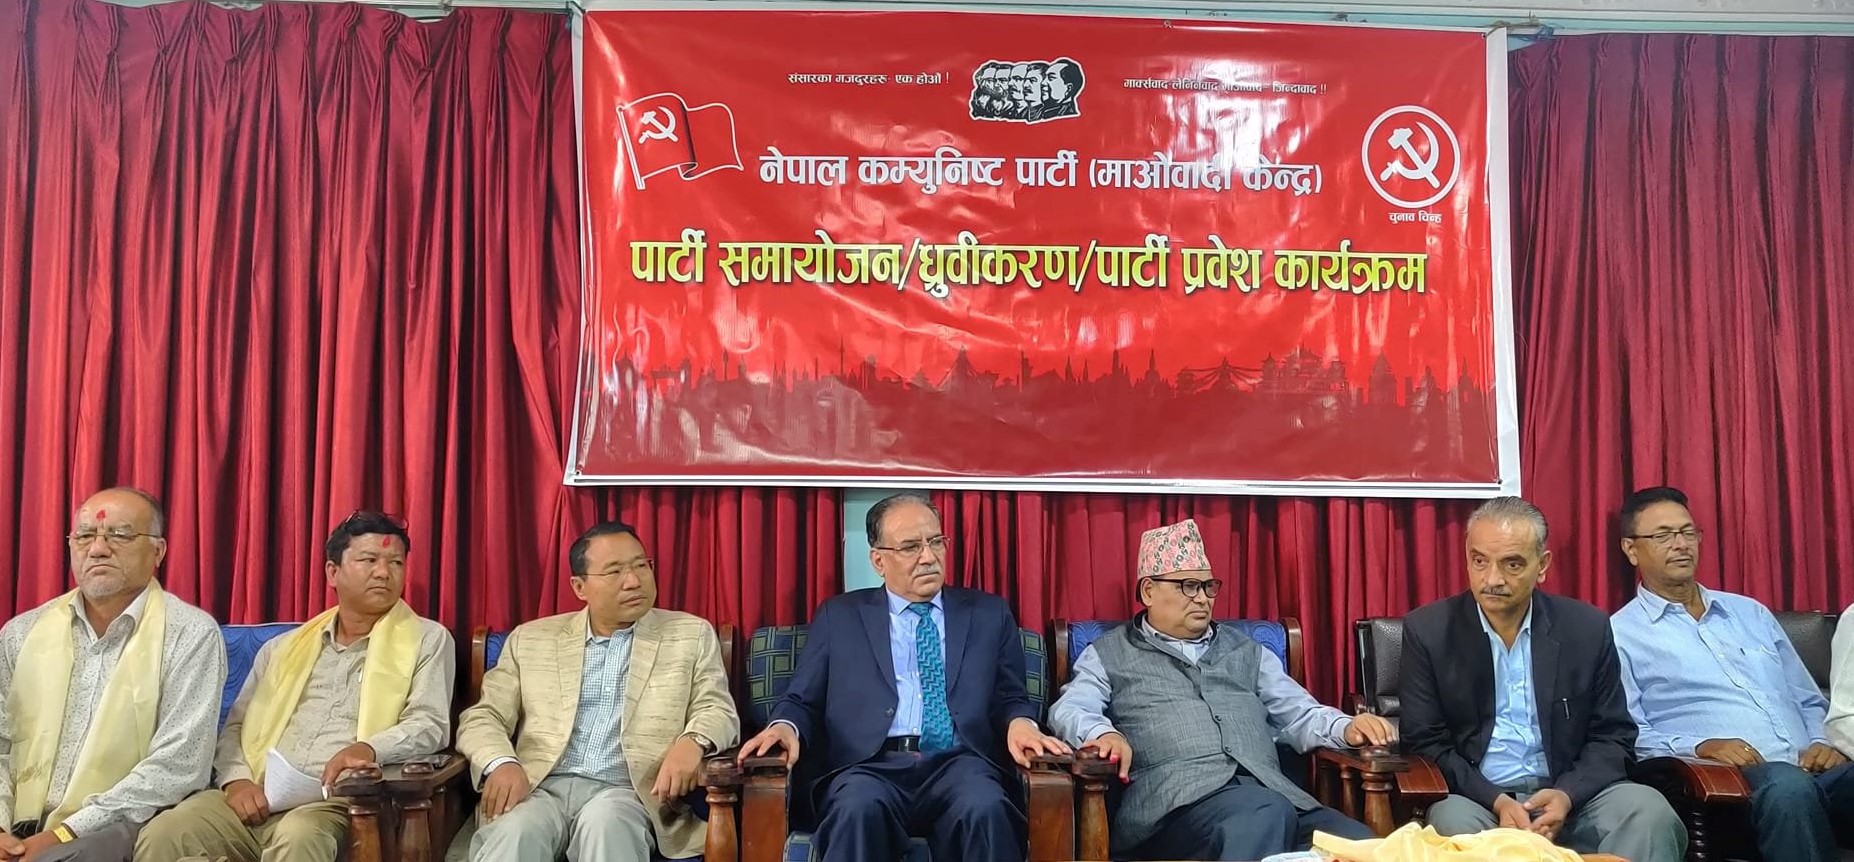 Prachanda reiterates unity among Maoist forces for nation’s prosperity